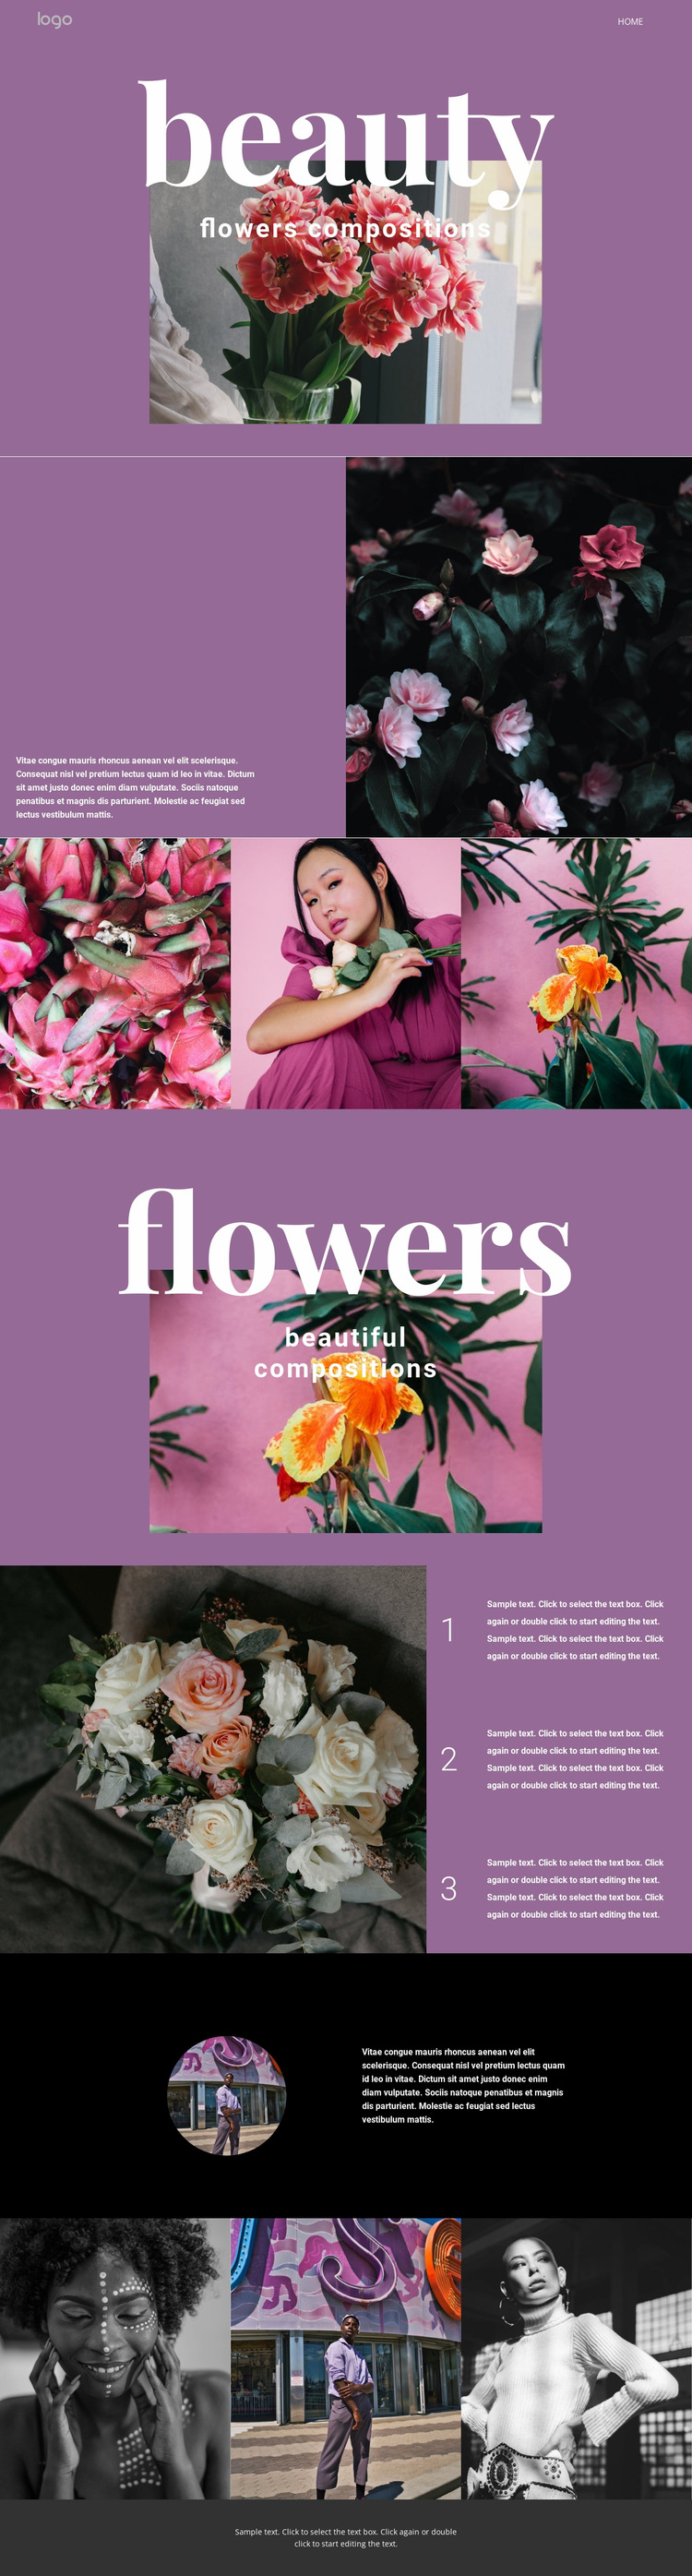 Flower salon Website Design